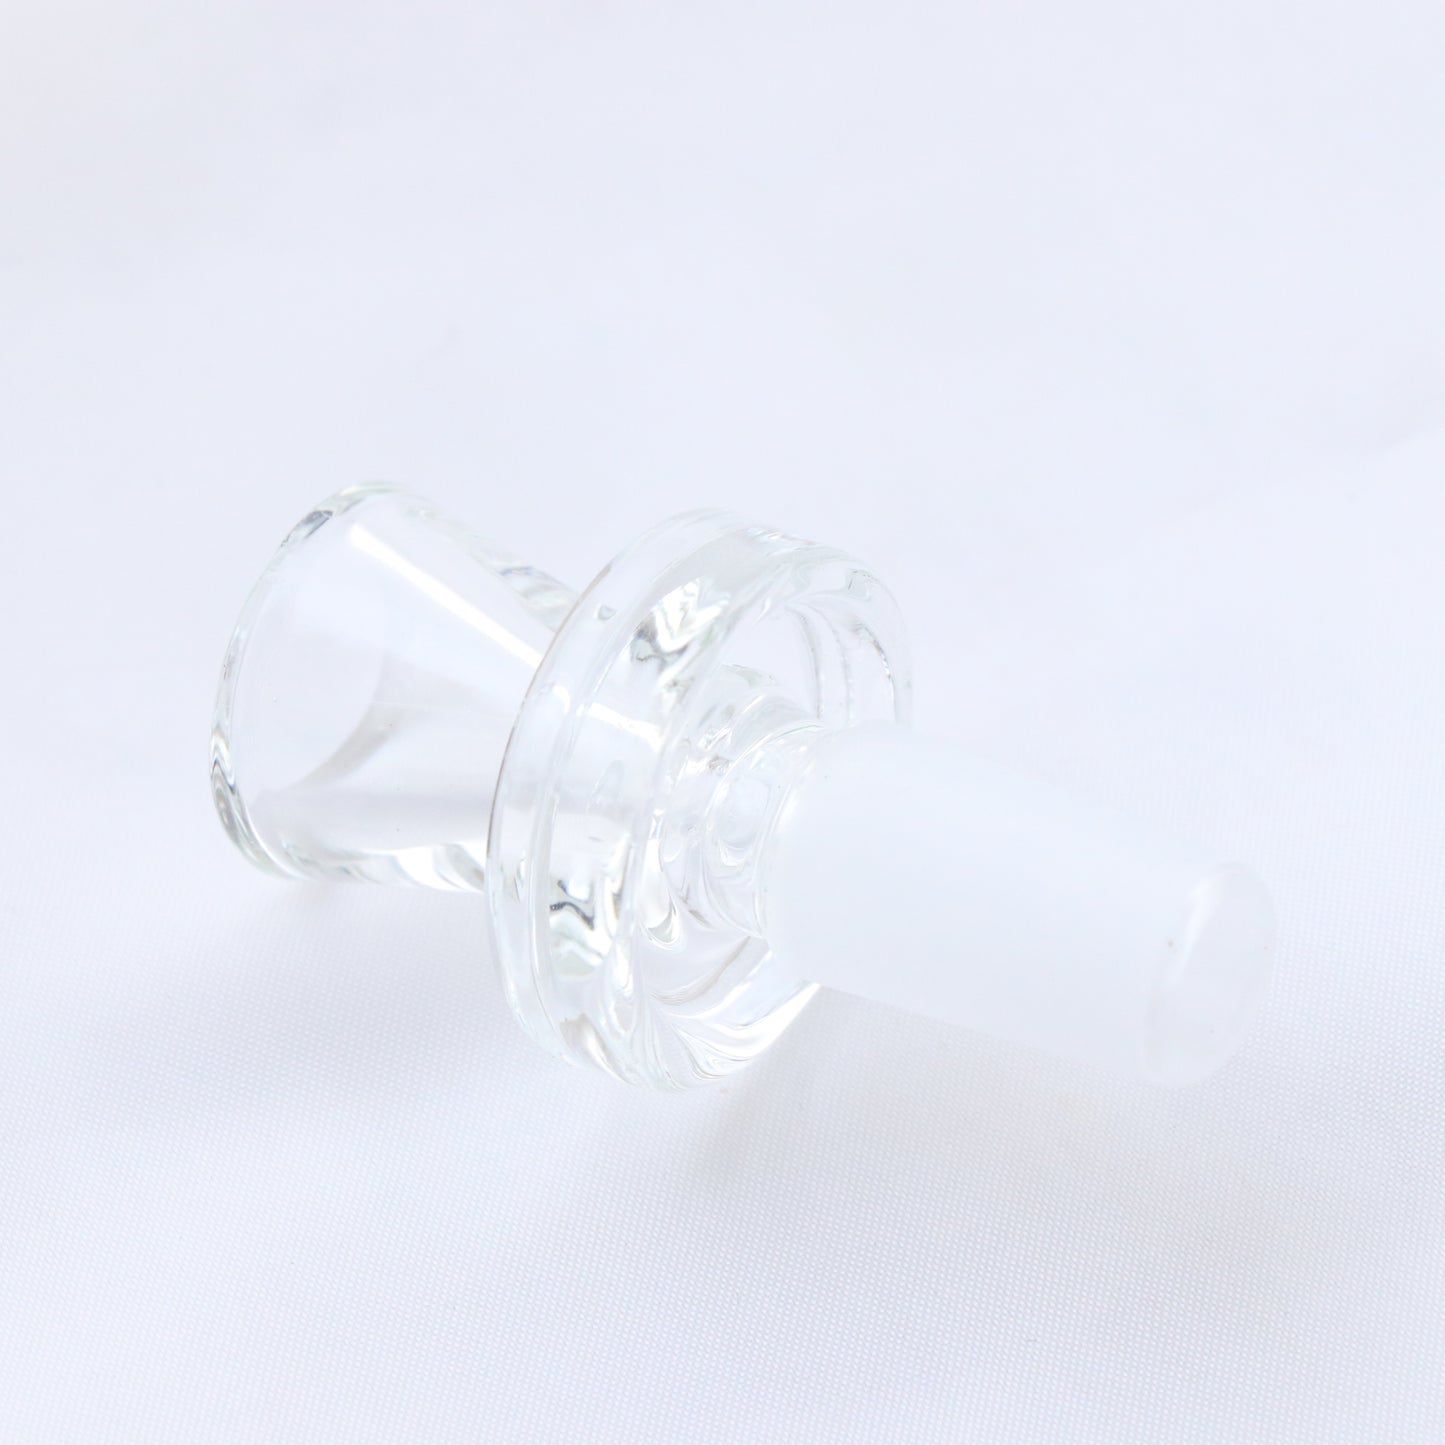 14mm Glass Bowl - Fancy Puffs Smoke Shop